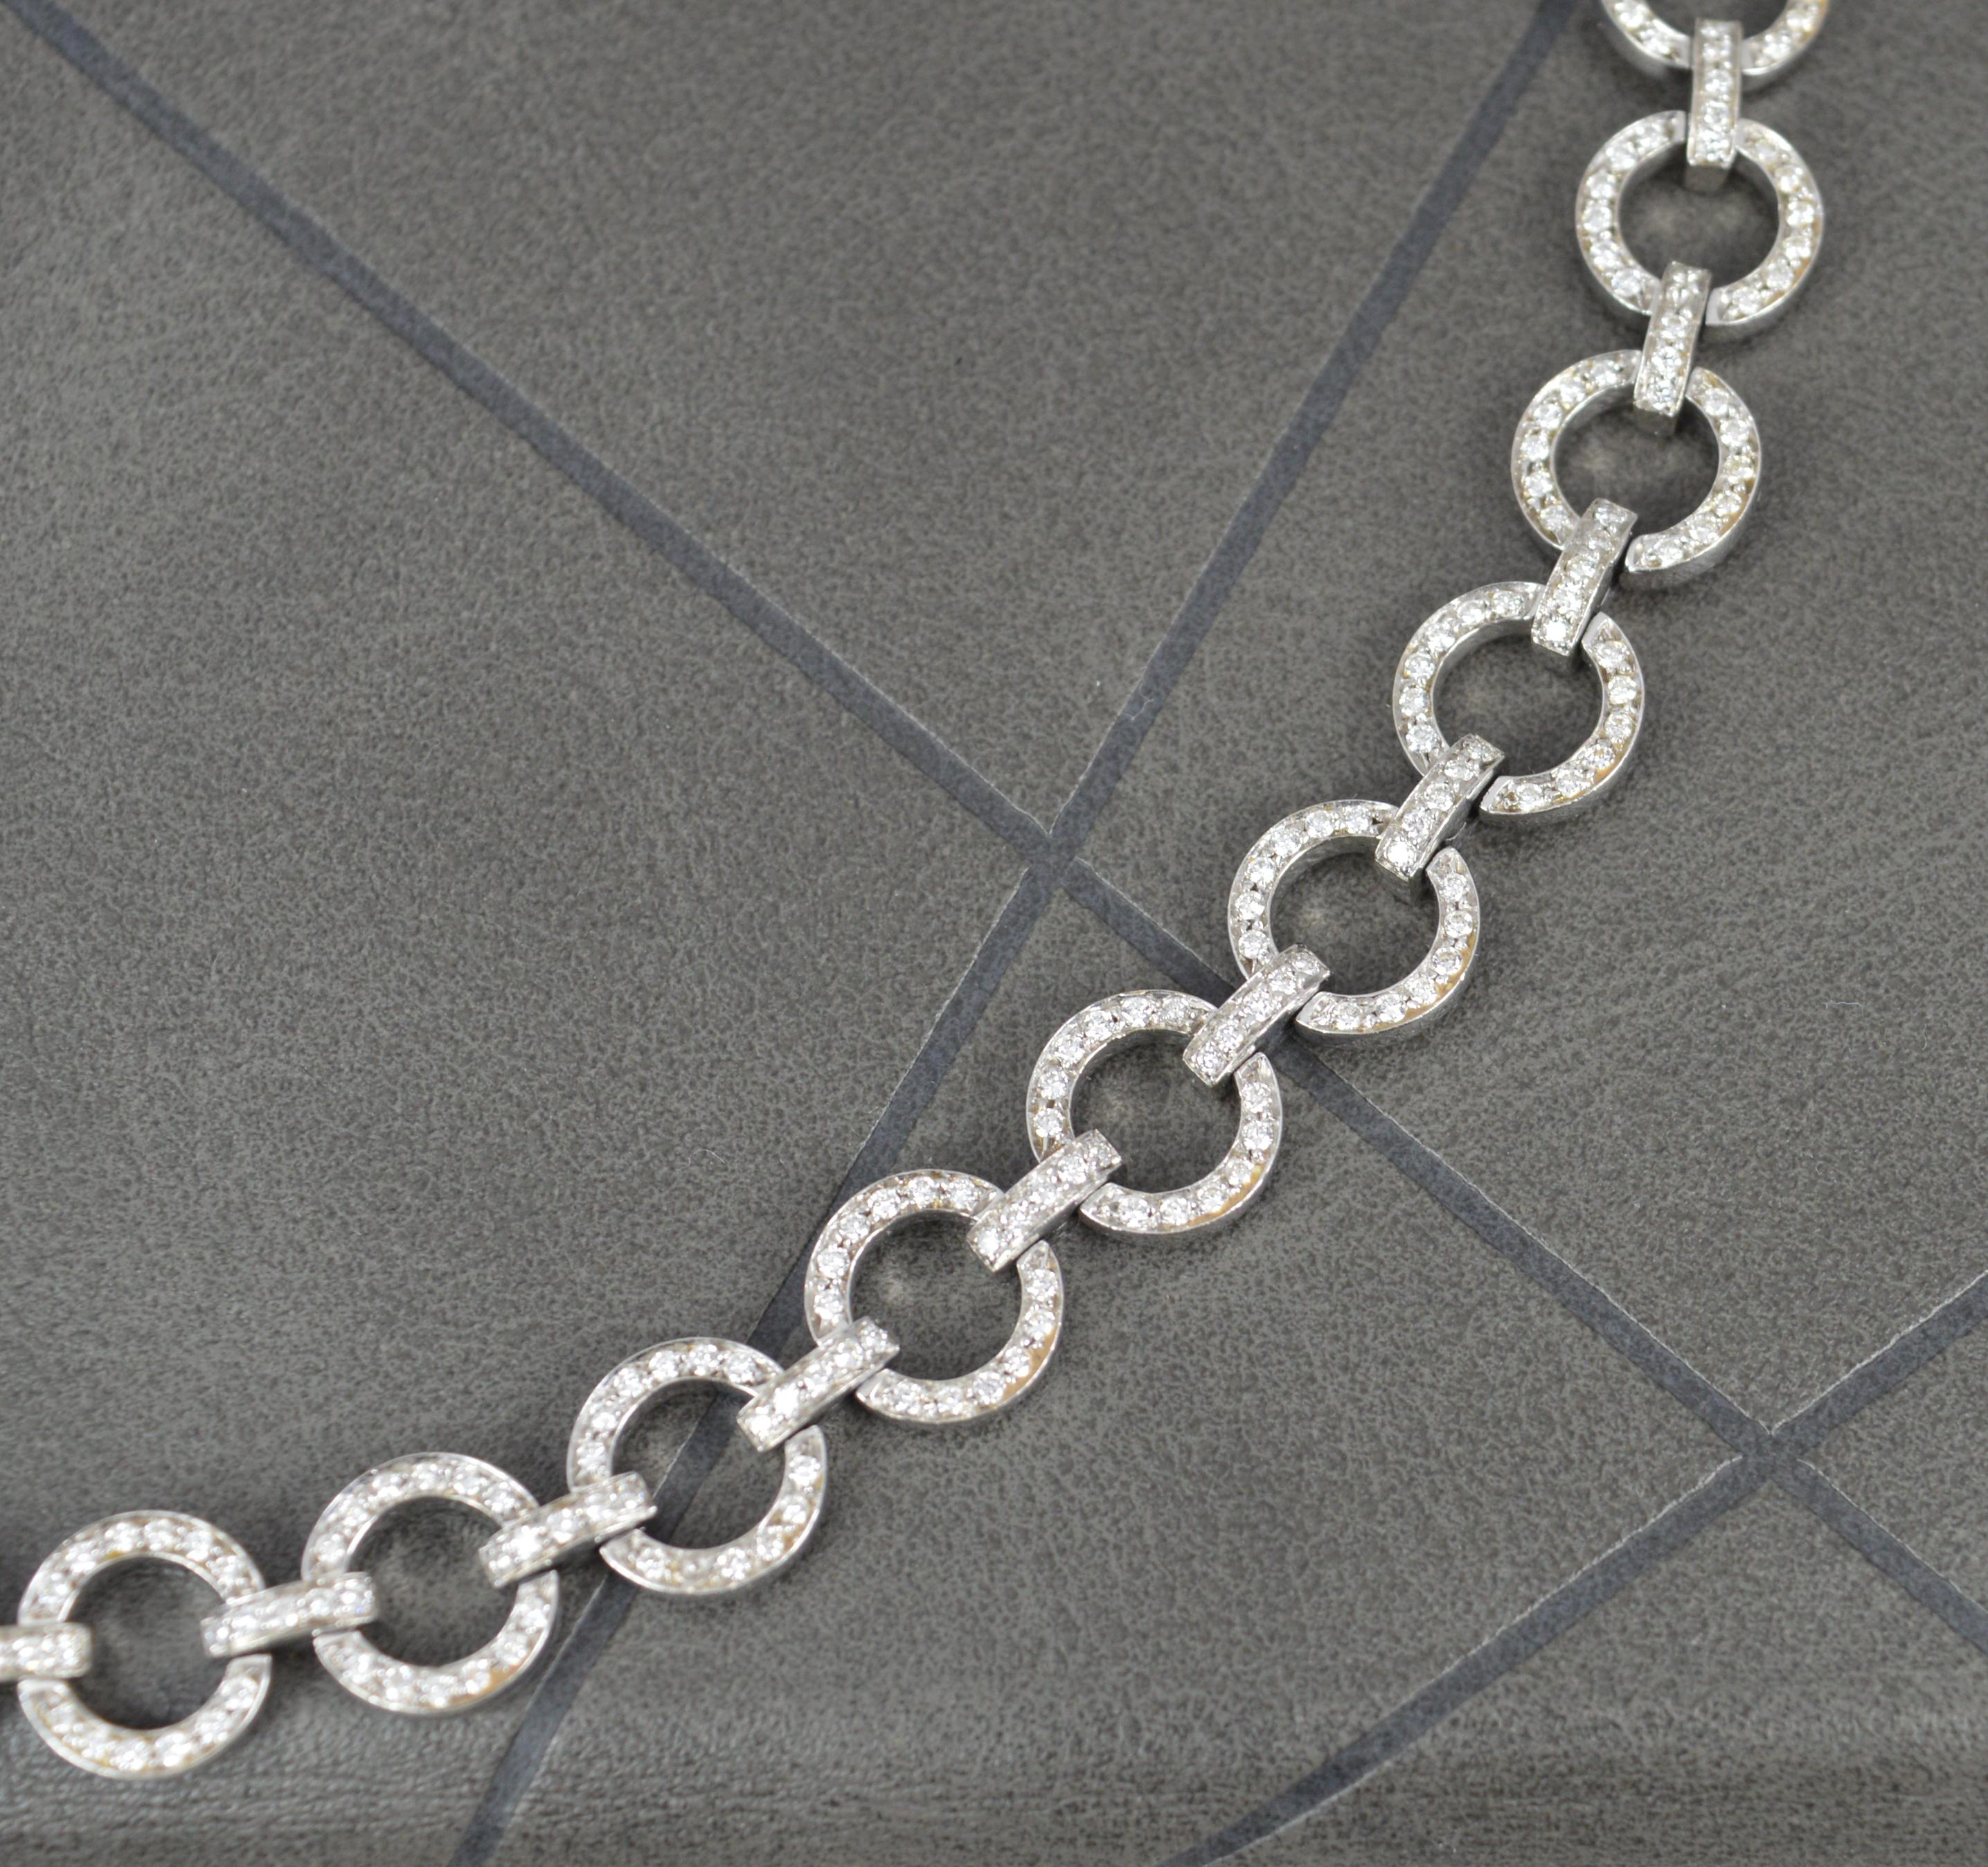 Chantecler Capri Solid 18 Carat White Gold Diamond Necklace For Sale 2